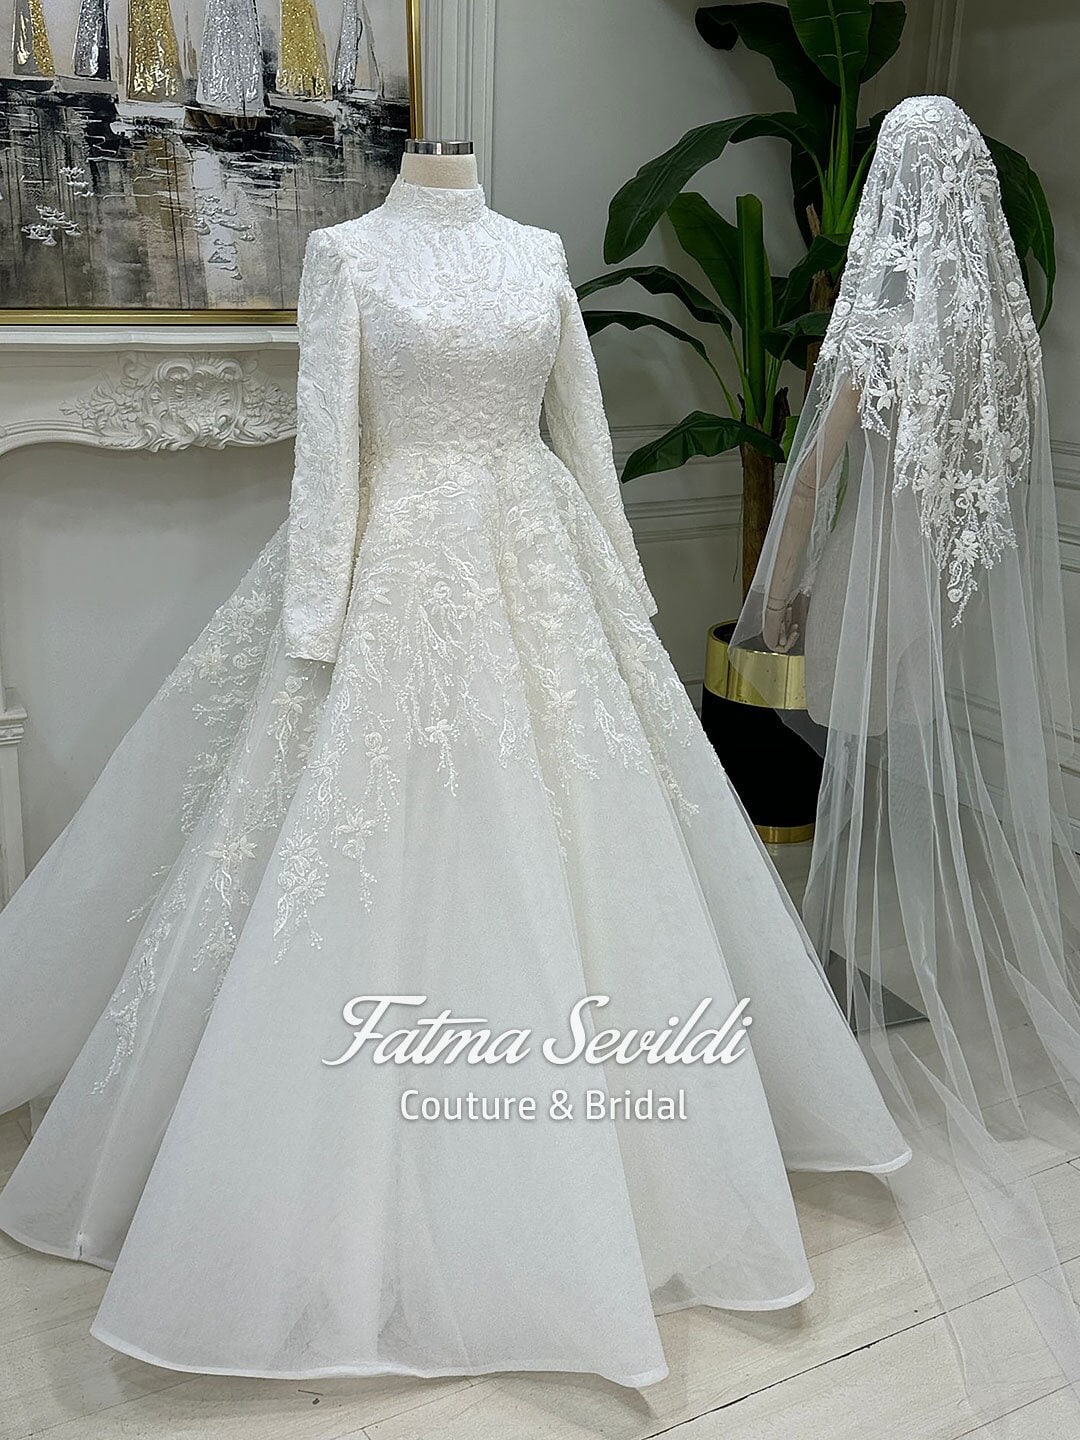 Brides Long Satin White Dress Back Stock Photo 2334705359 | Shutterstock